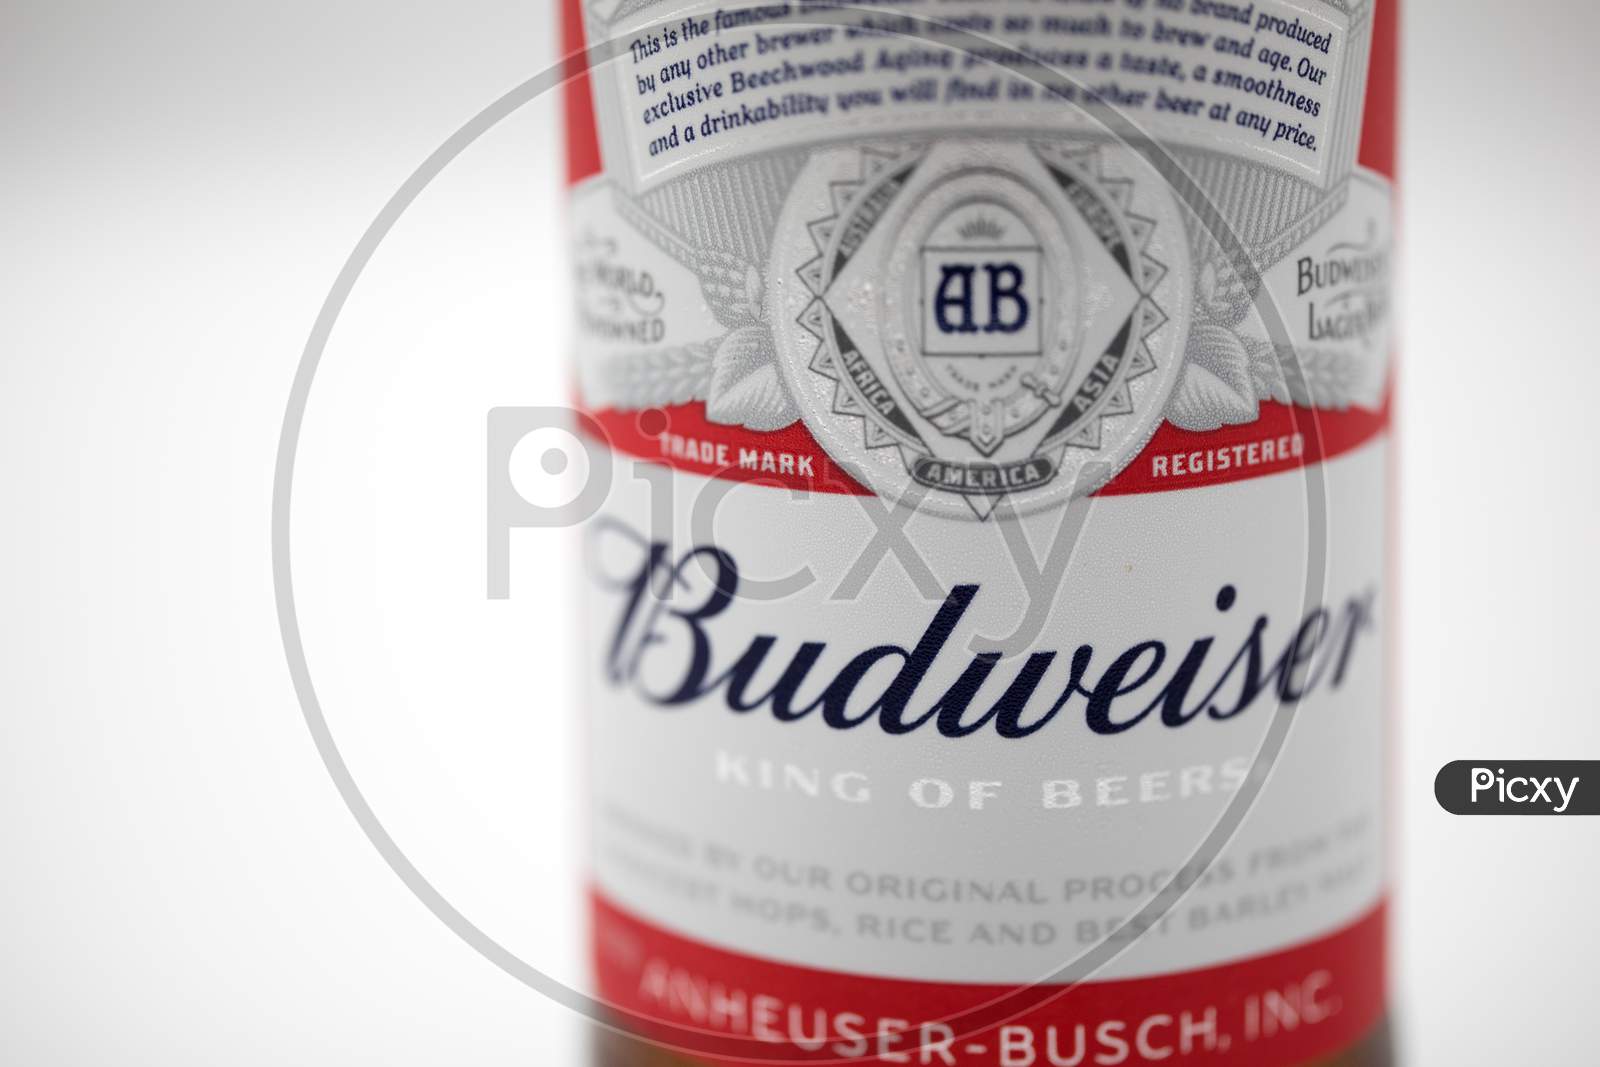 Budweiser logo on a beer bottle on white background